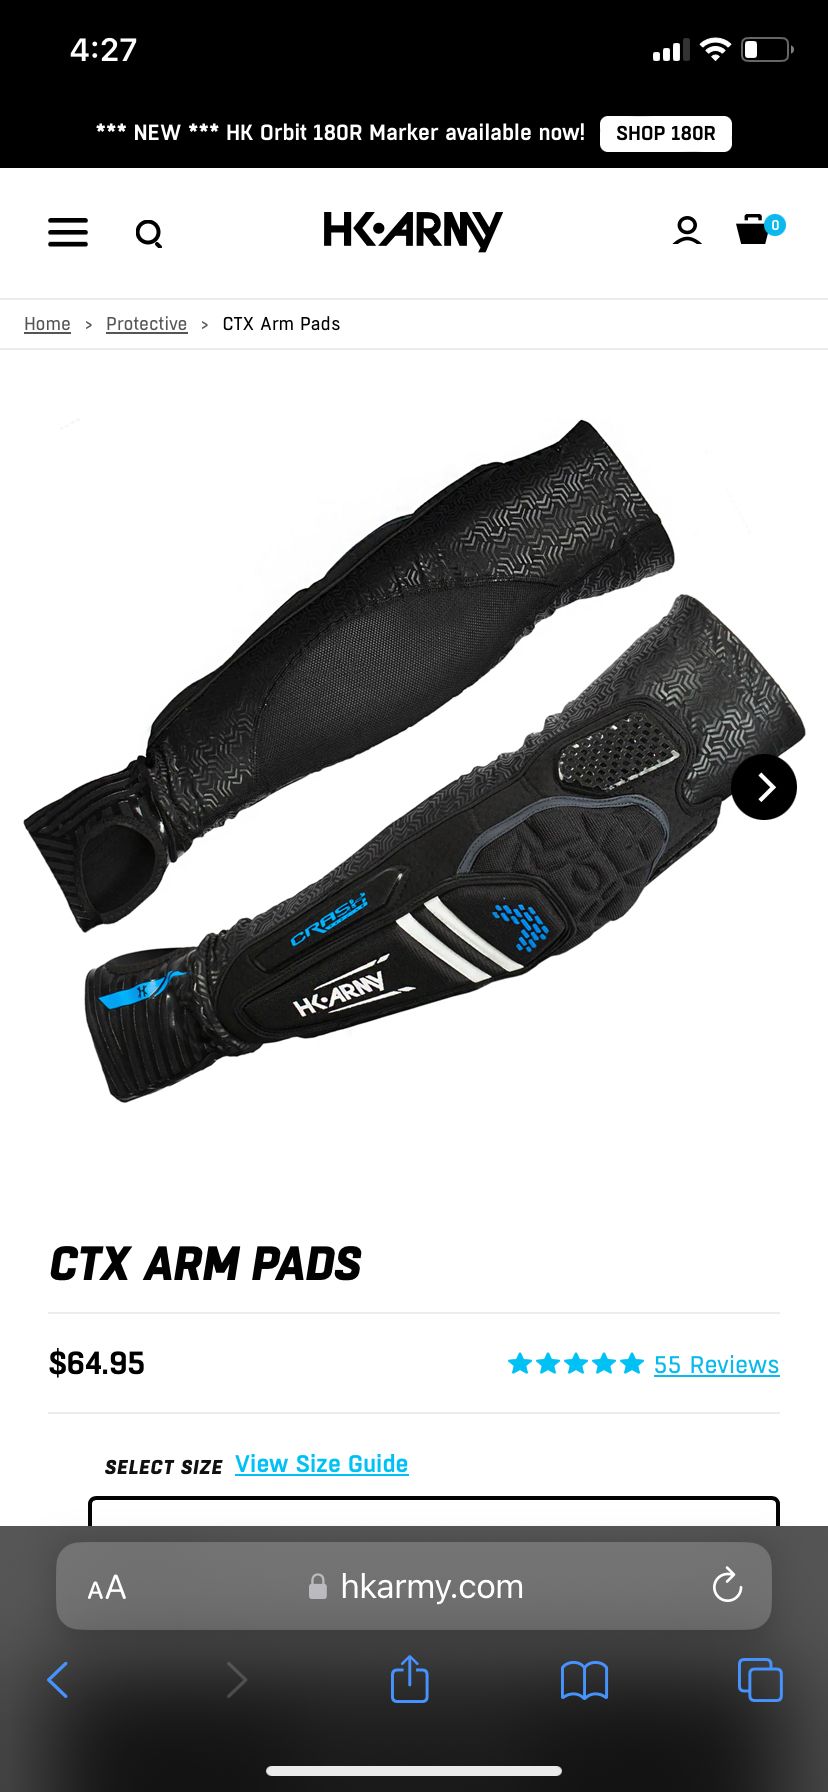 HK CTX Arm Pads